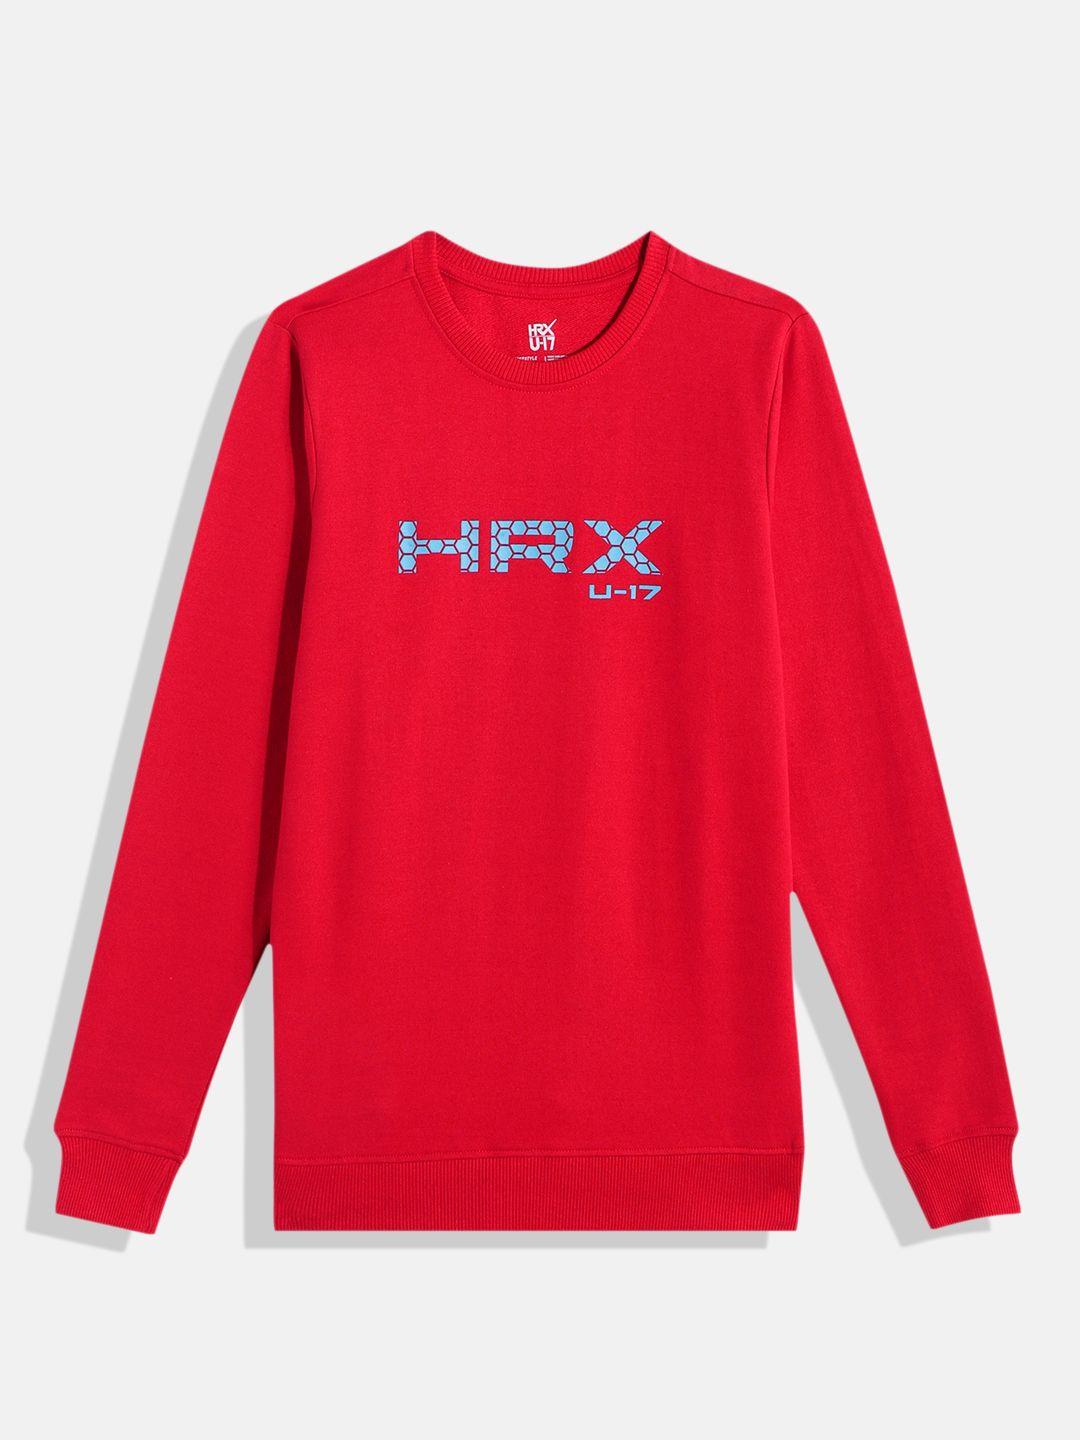 hrx by hrithik roshan boys printed sweatshirt